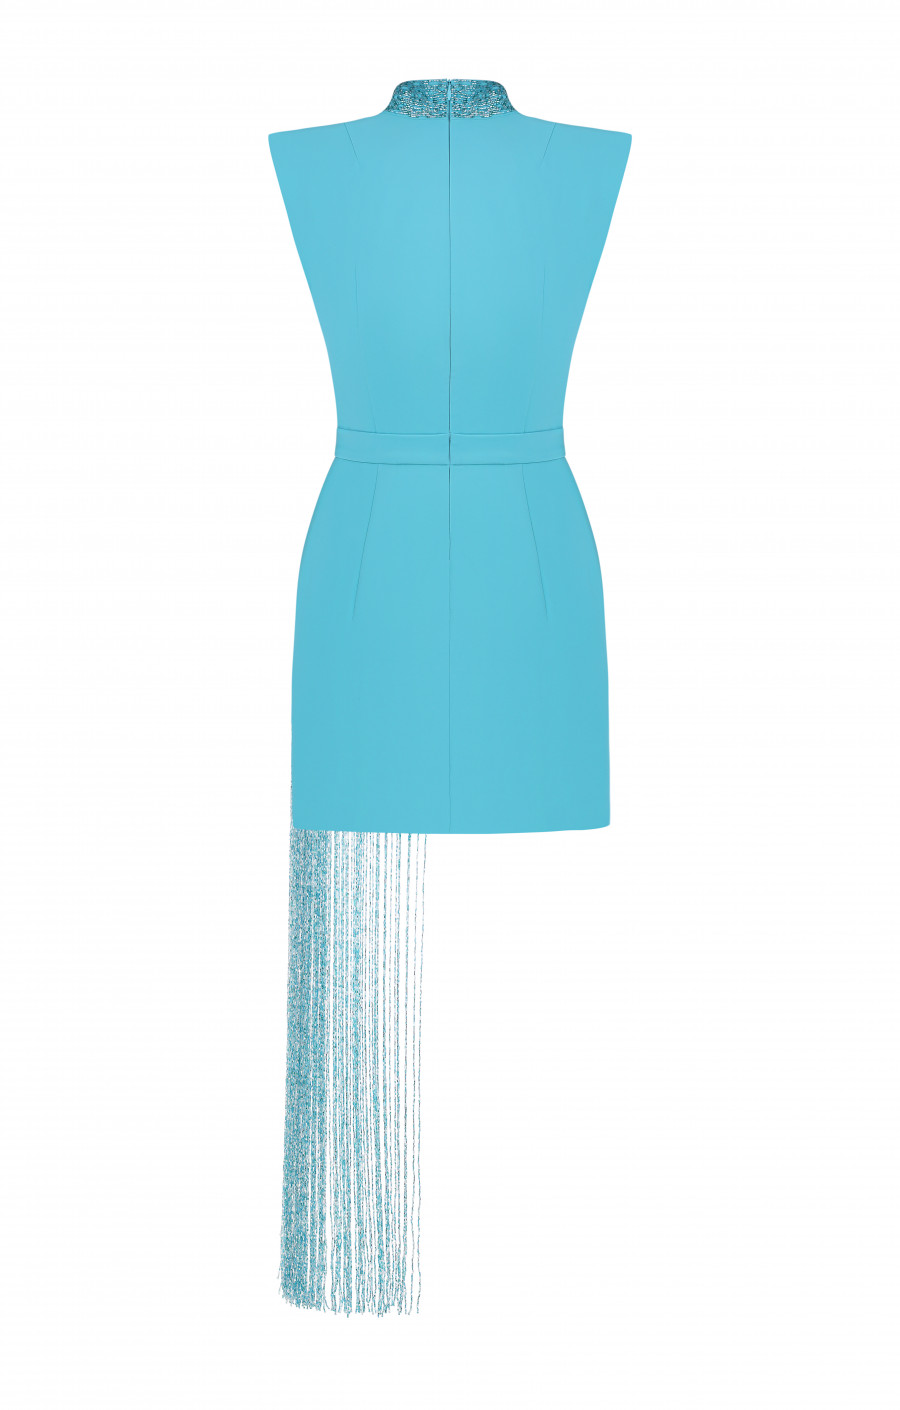 Turquoise crepe dress